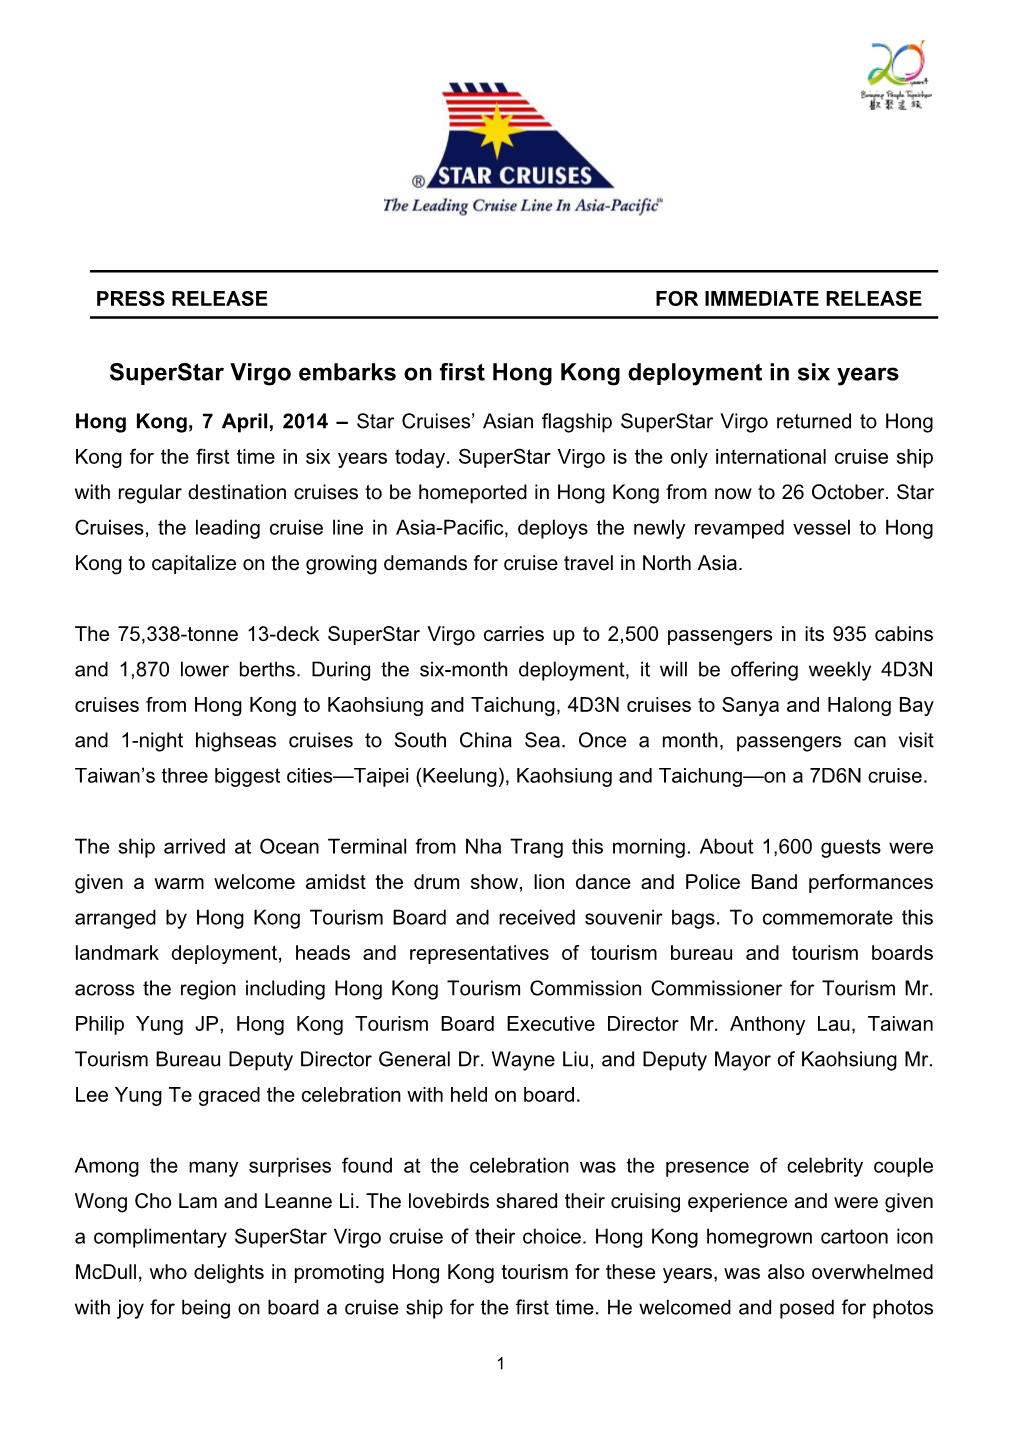 Superstar Virgo Embarks on First Hong Kong Deployment in Six Years